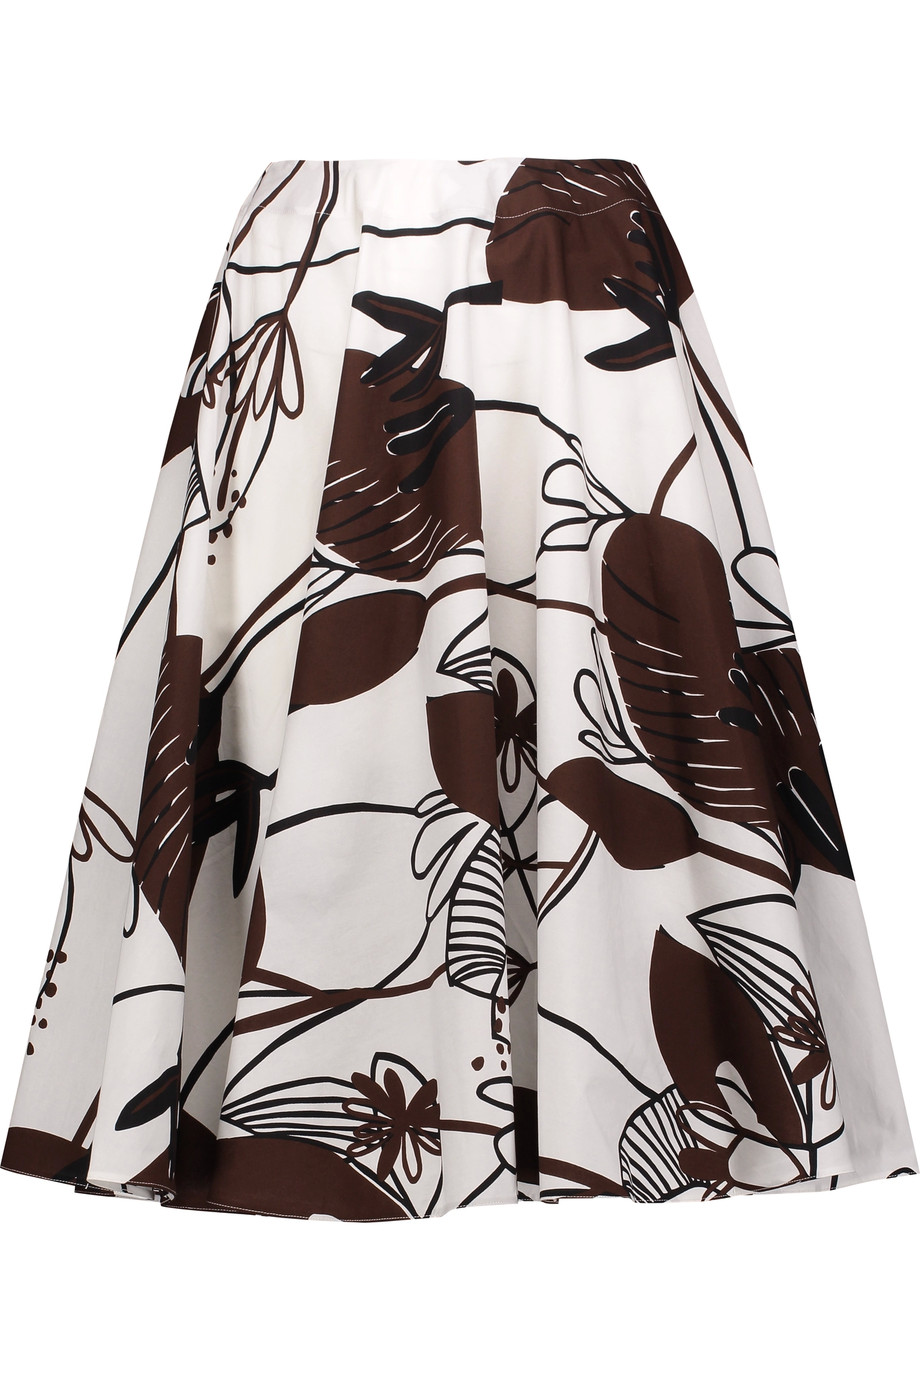 Marni Pleated Printed Cotton Skirt | ModeSens